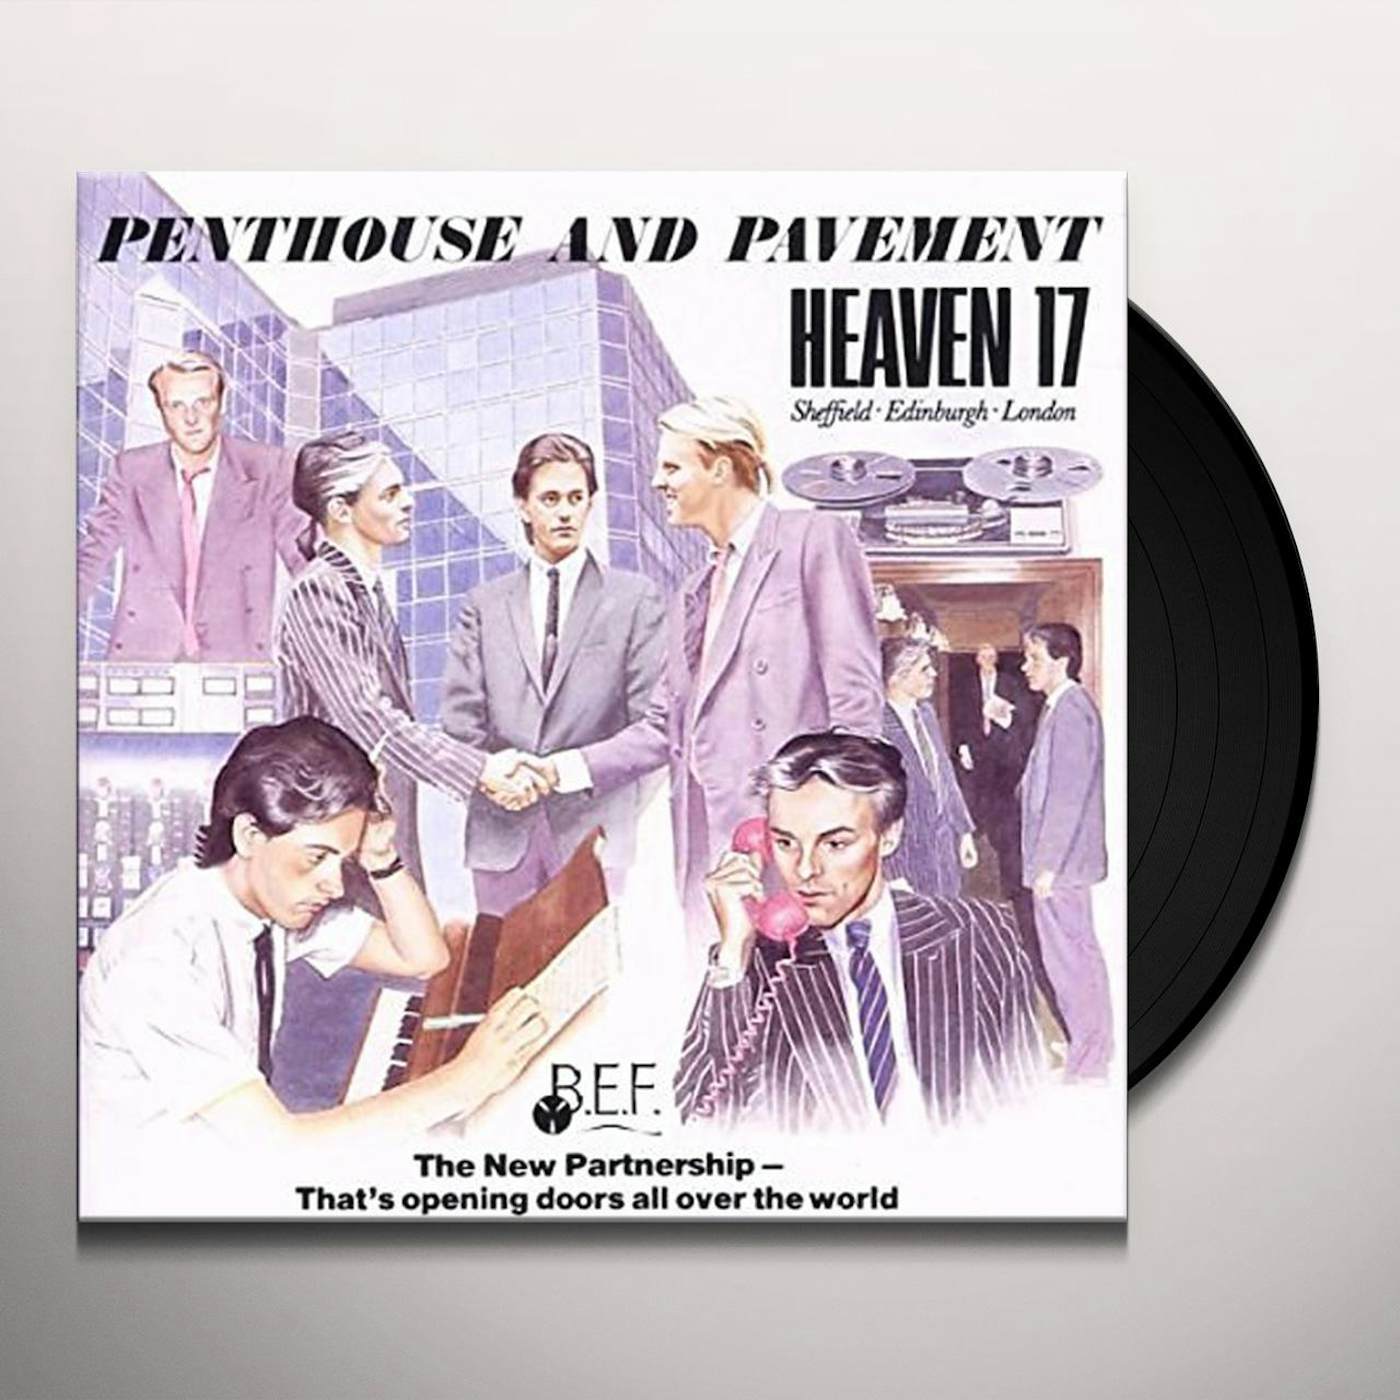 Heaven 17 Penthouse And Pavement Vinyl Record